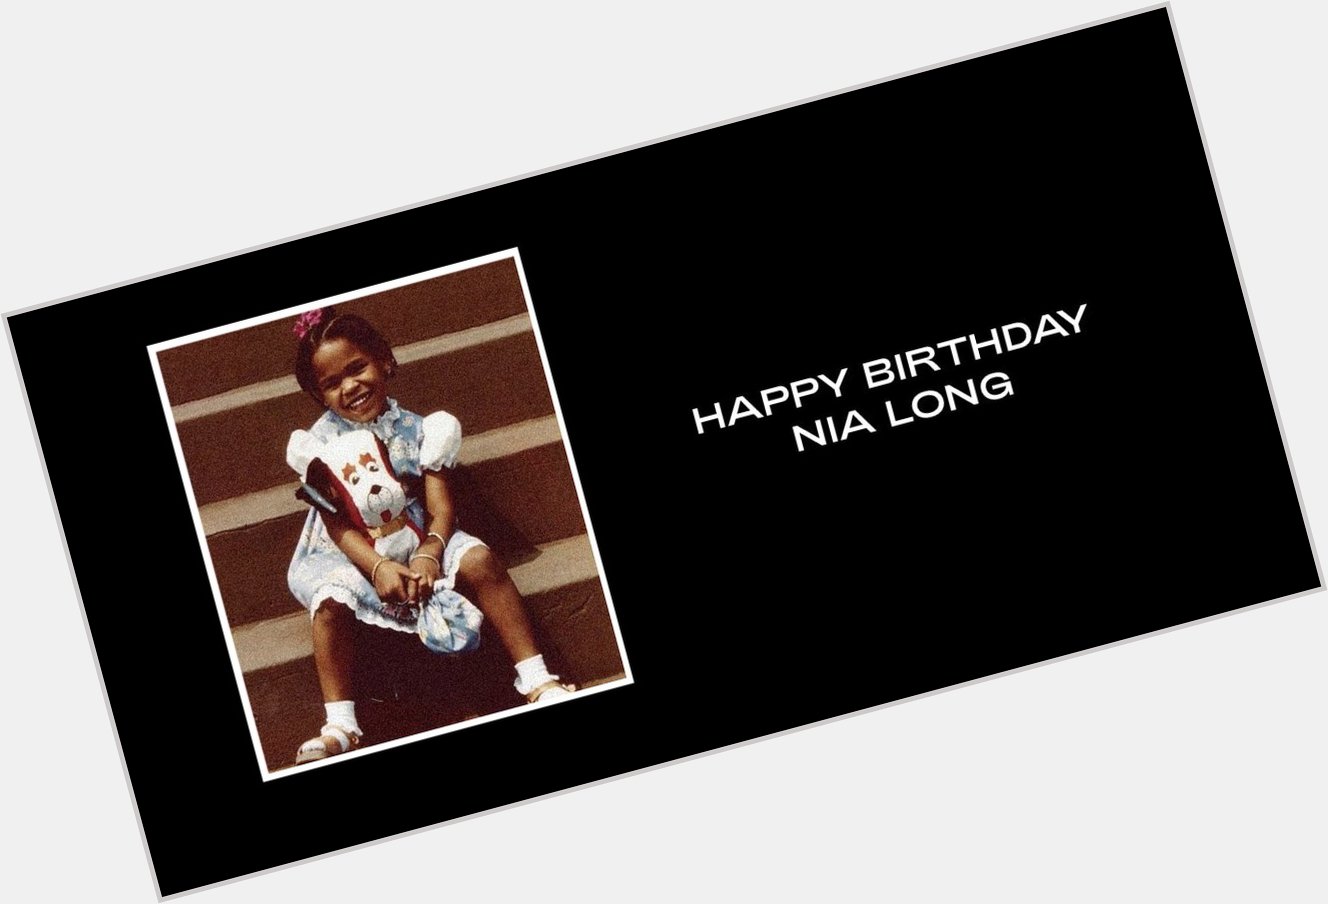  Happy Birthday Nia Long & Willow Smith  